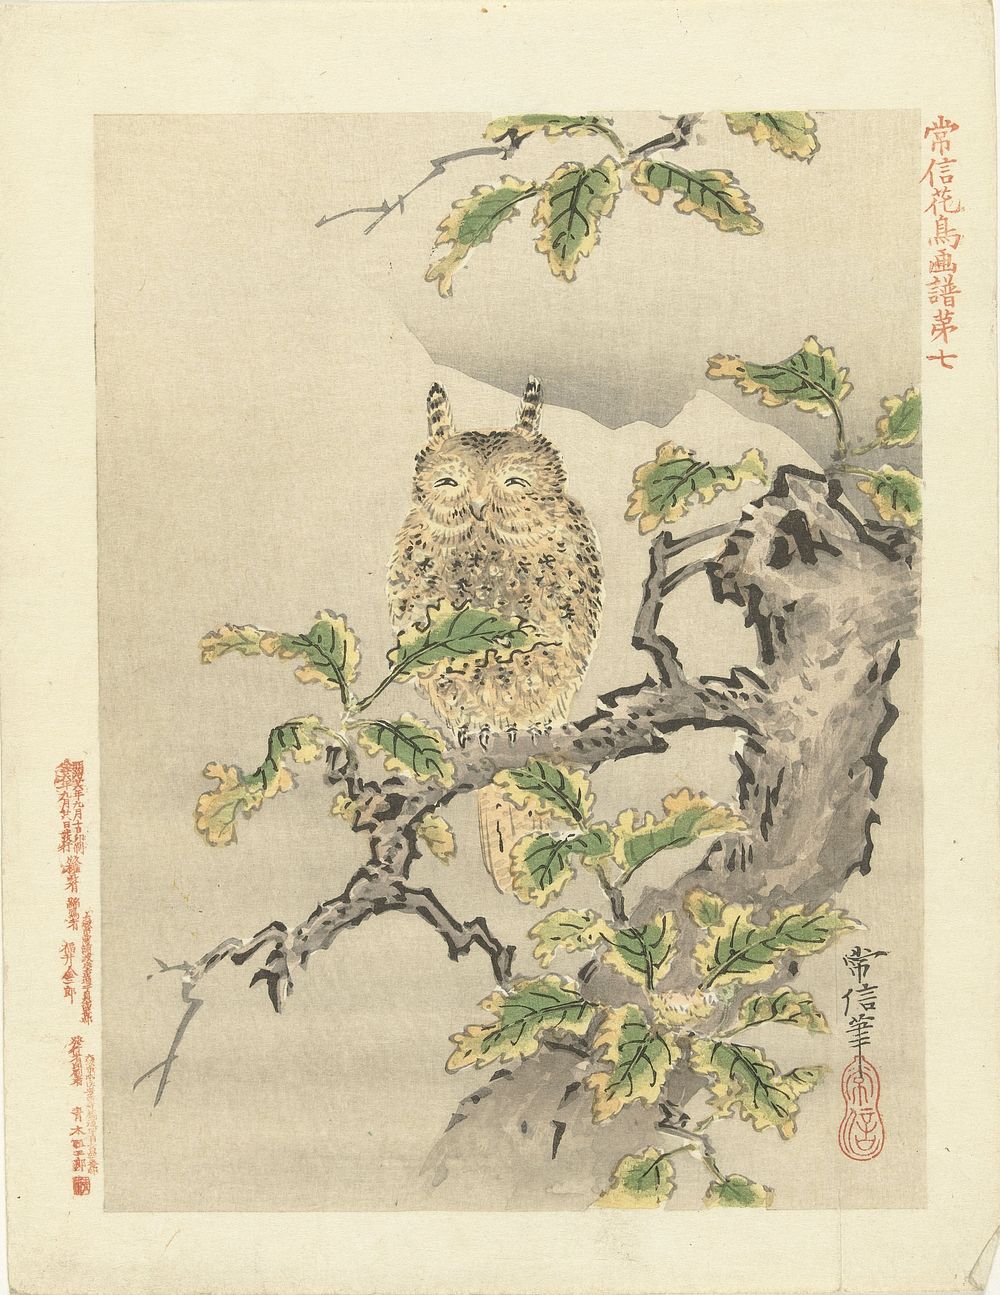 Uil op tak (1893) by Kano Tsunenobu, Aoki Kôsaburô and Aoki Kôsaburô